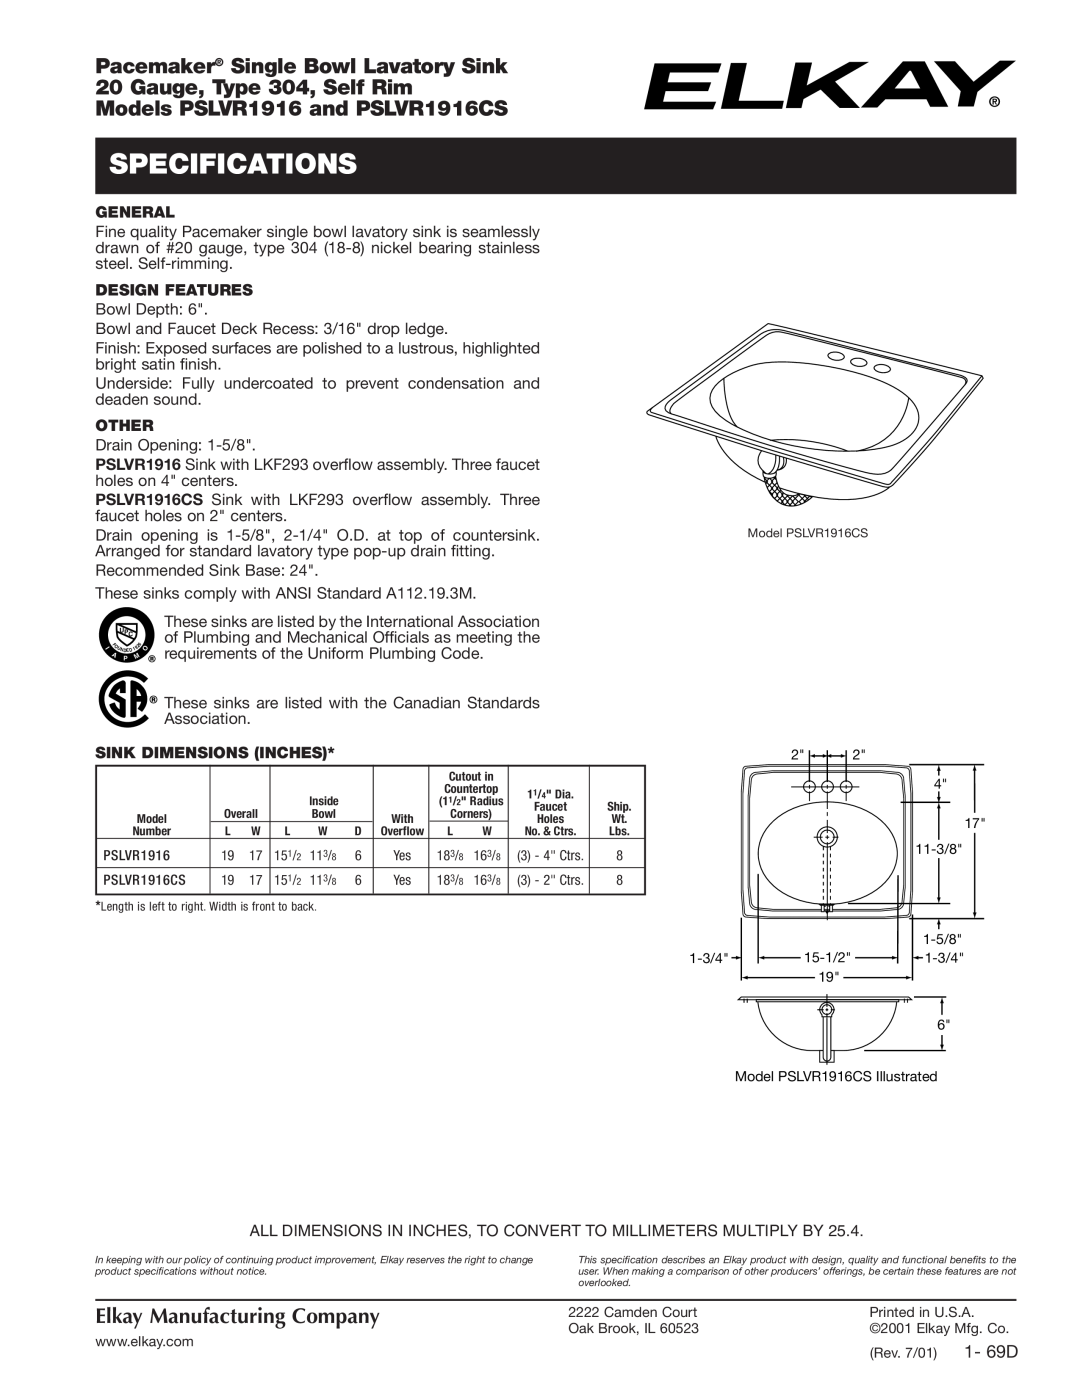 Elkay PSLVR1916 specifications Specifications, Pacemaker Single Bowl Lavatory Sink, Gauge, Type 304, Self Rim, General 